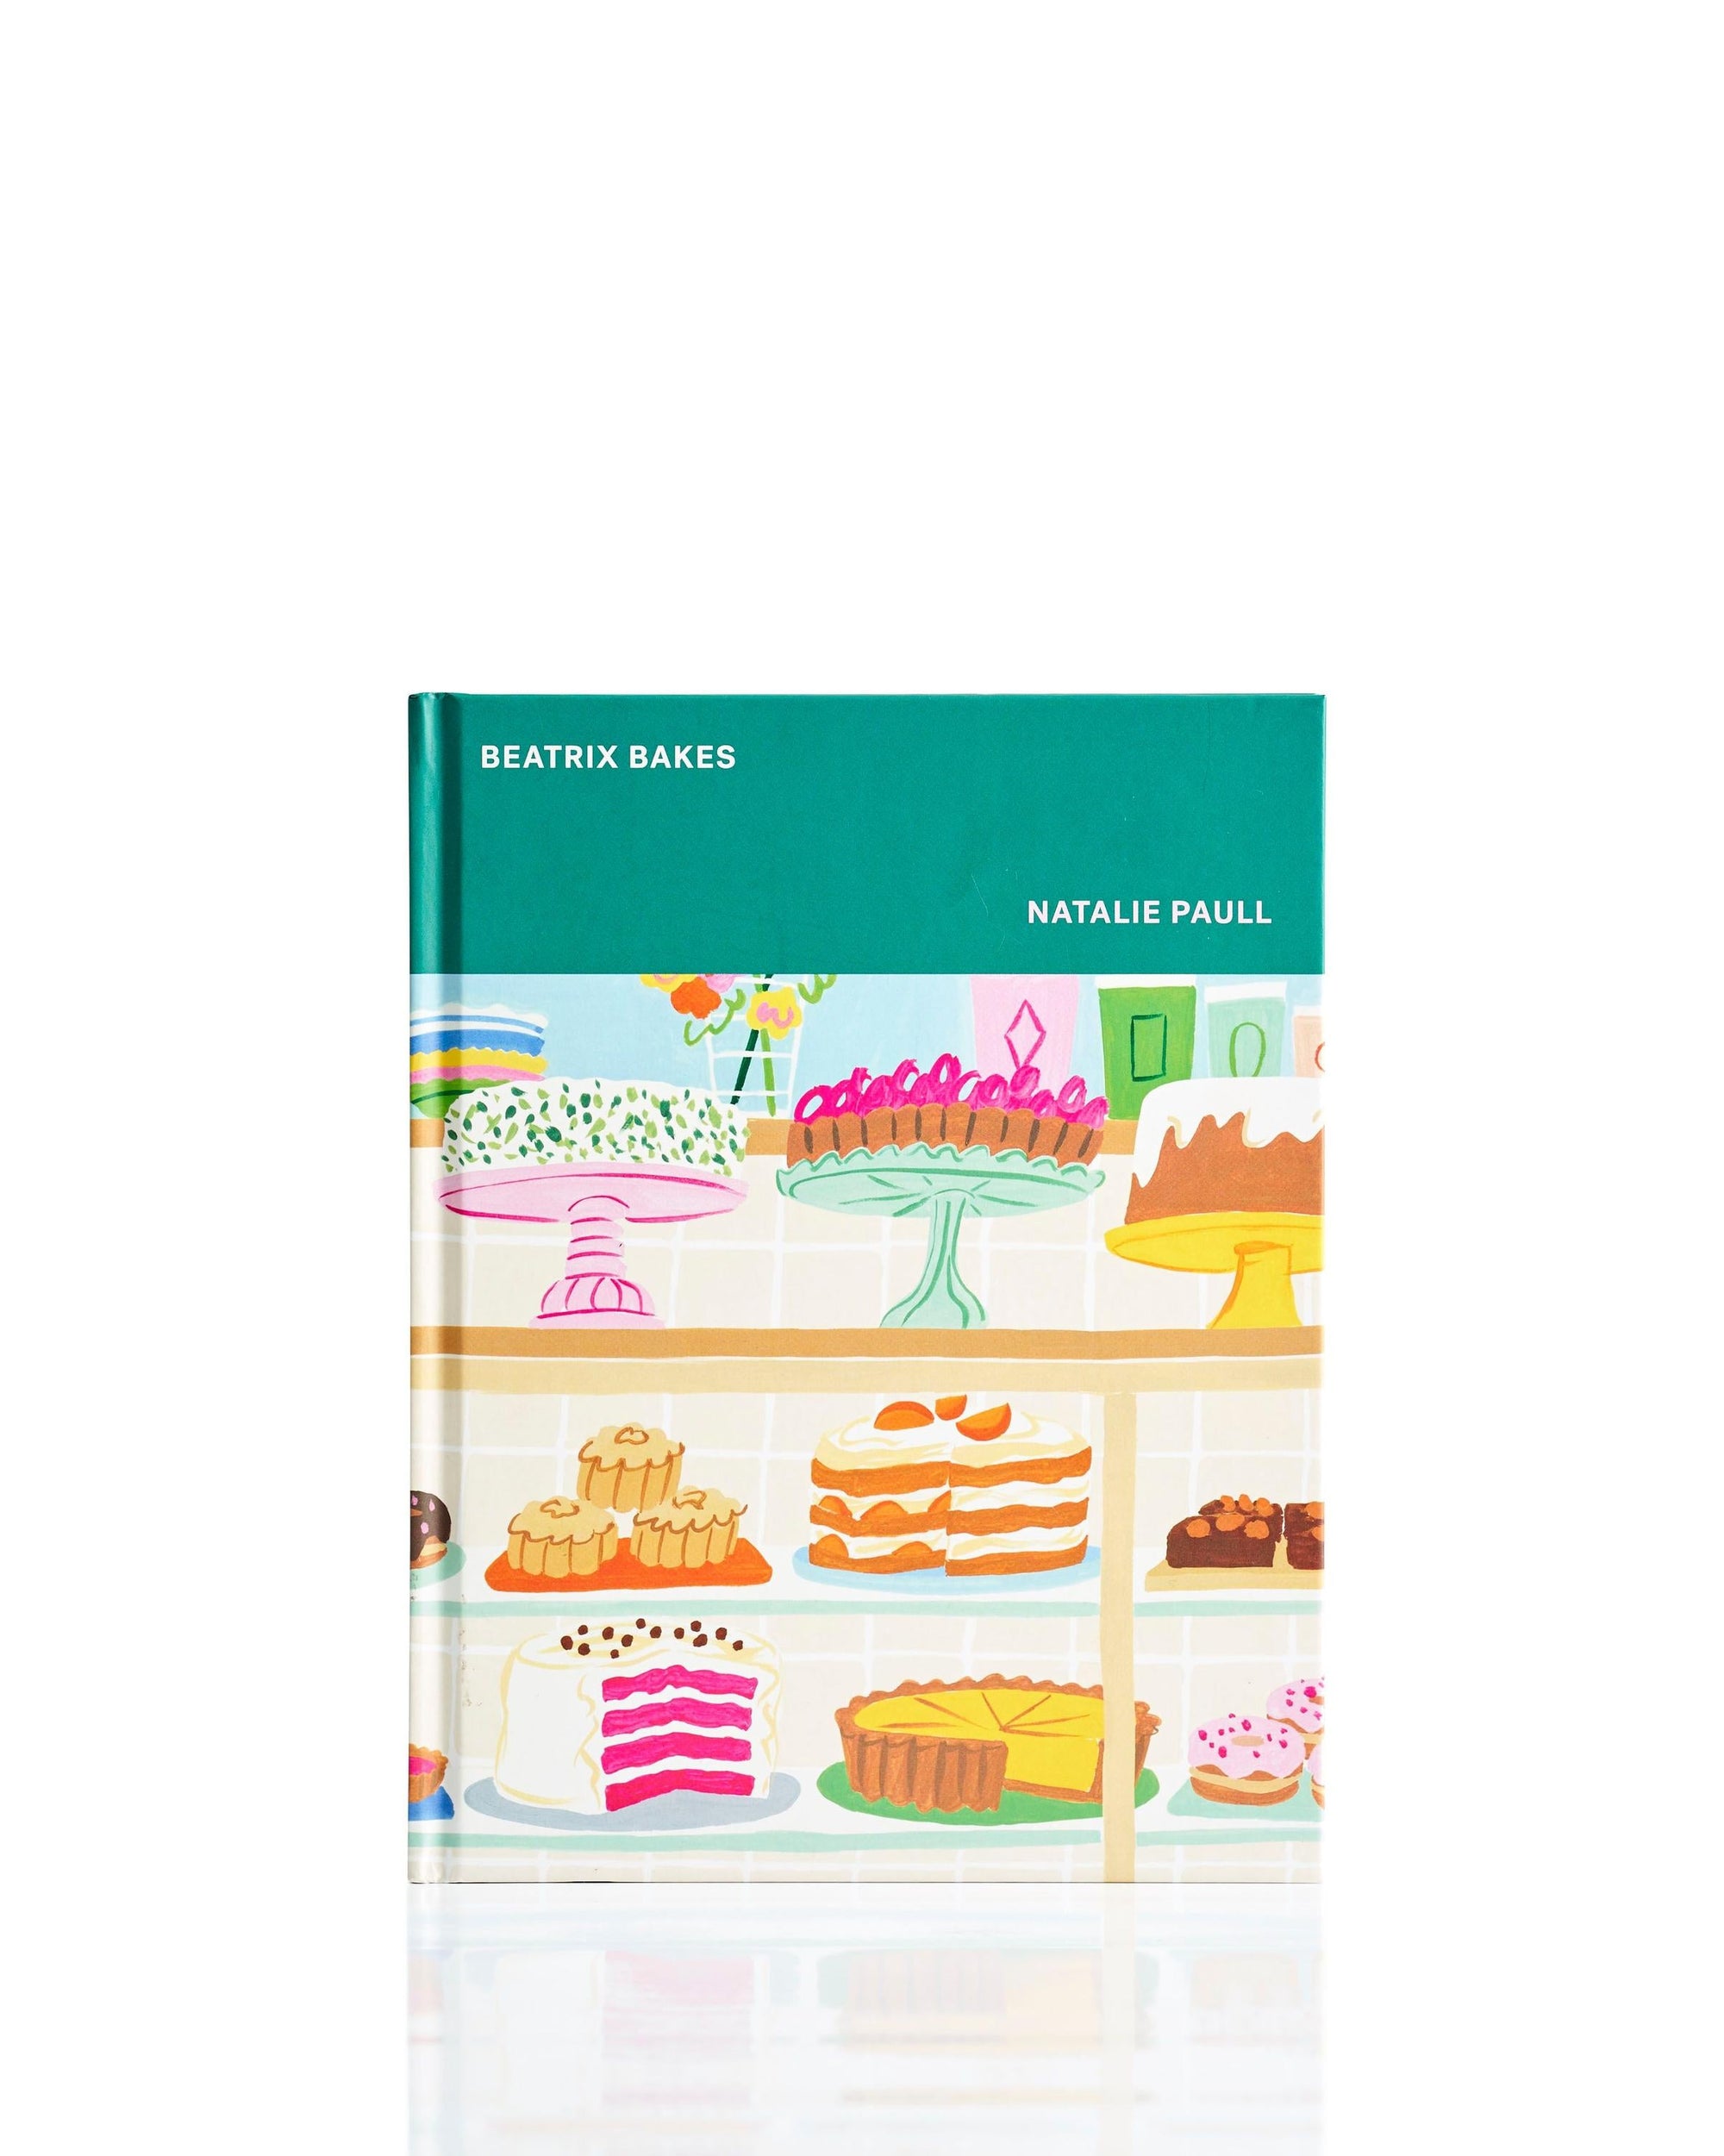 'Beatrix Bakes' cookbook